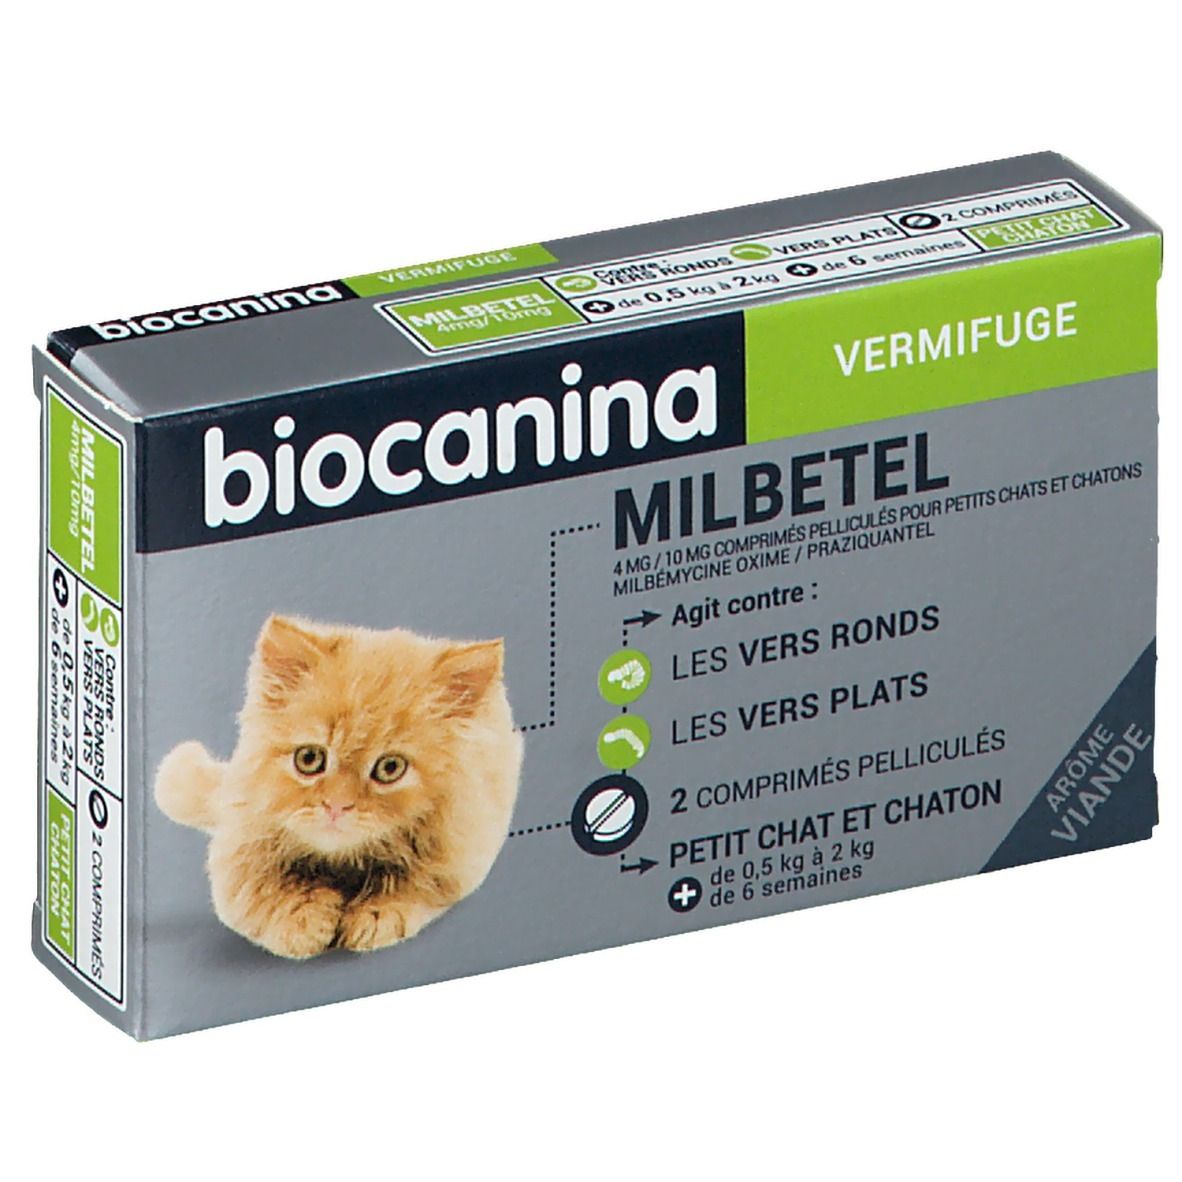 biocanina Milbetel petits chats et chatons